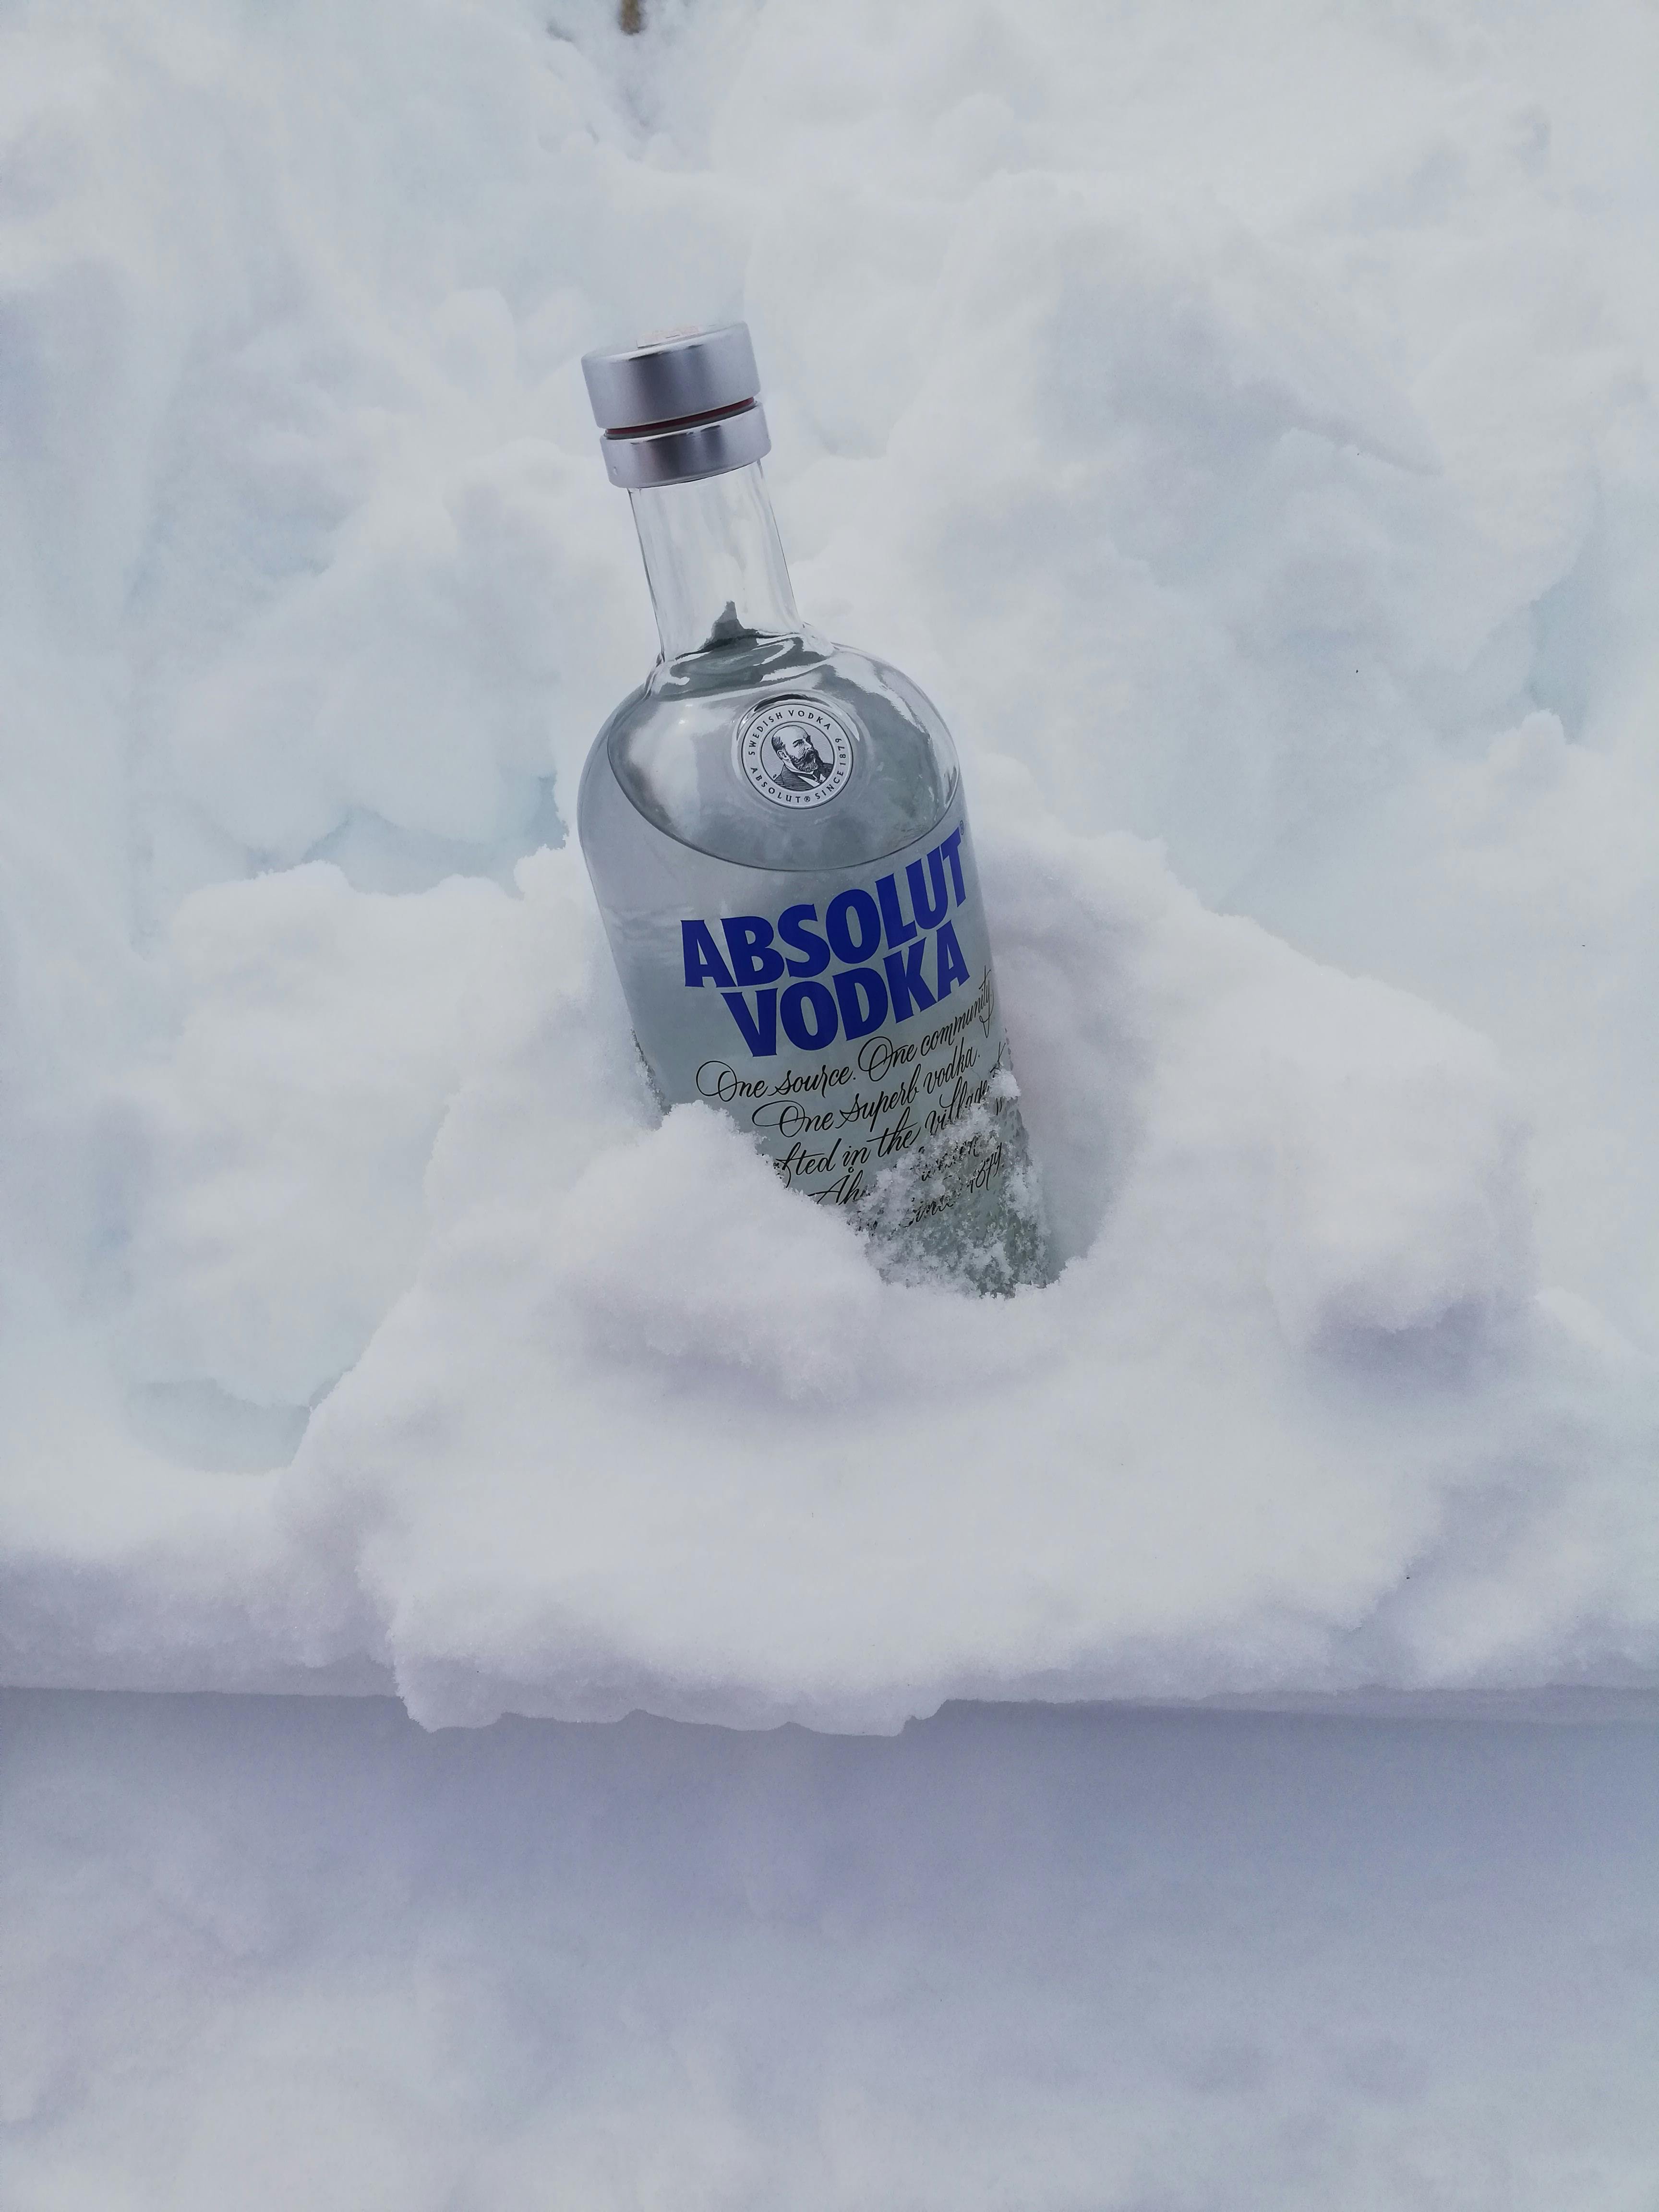 Vodka Bottle In The Snow · Free Stock Photo